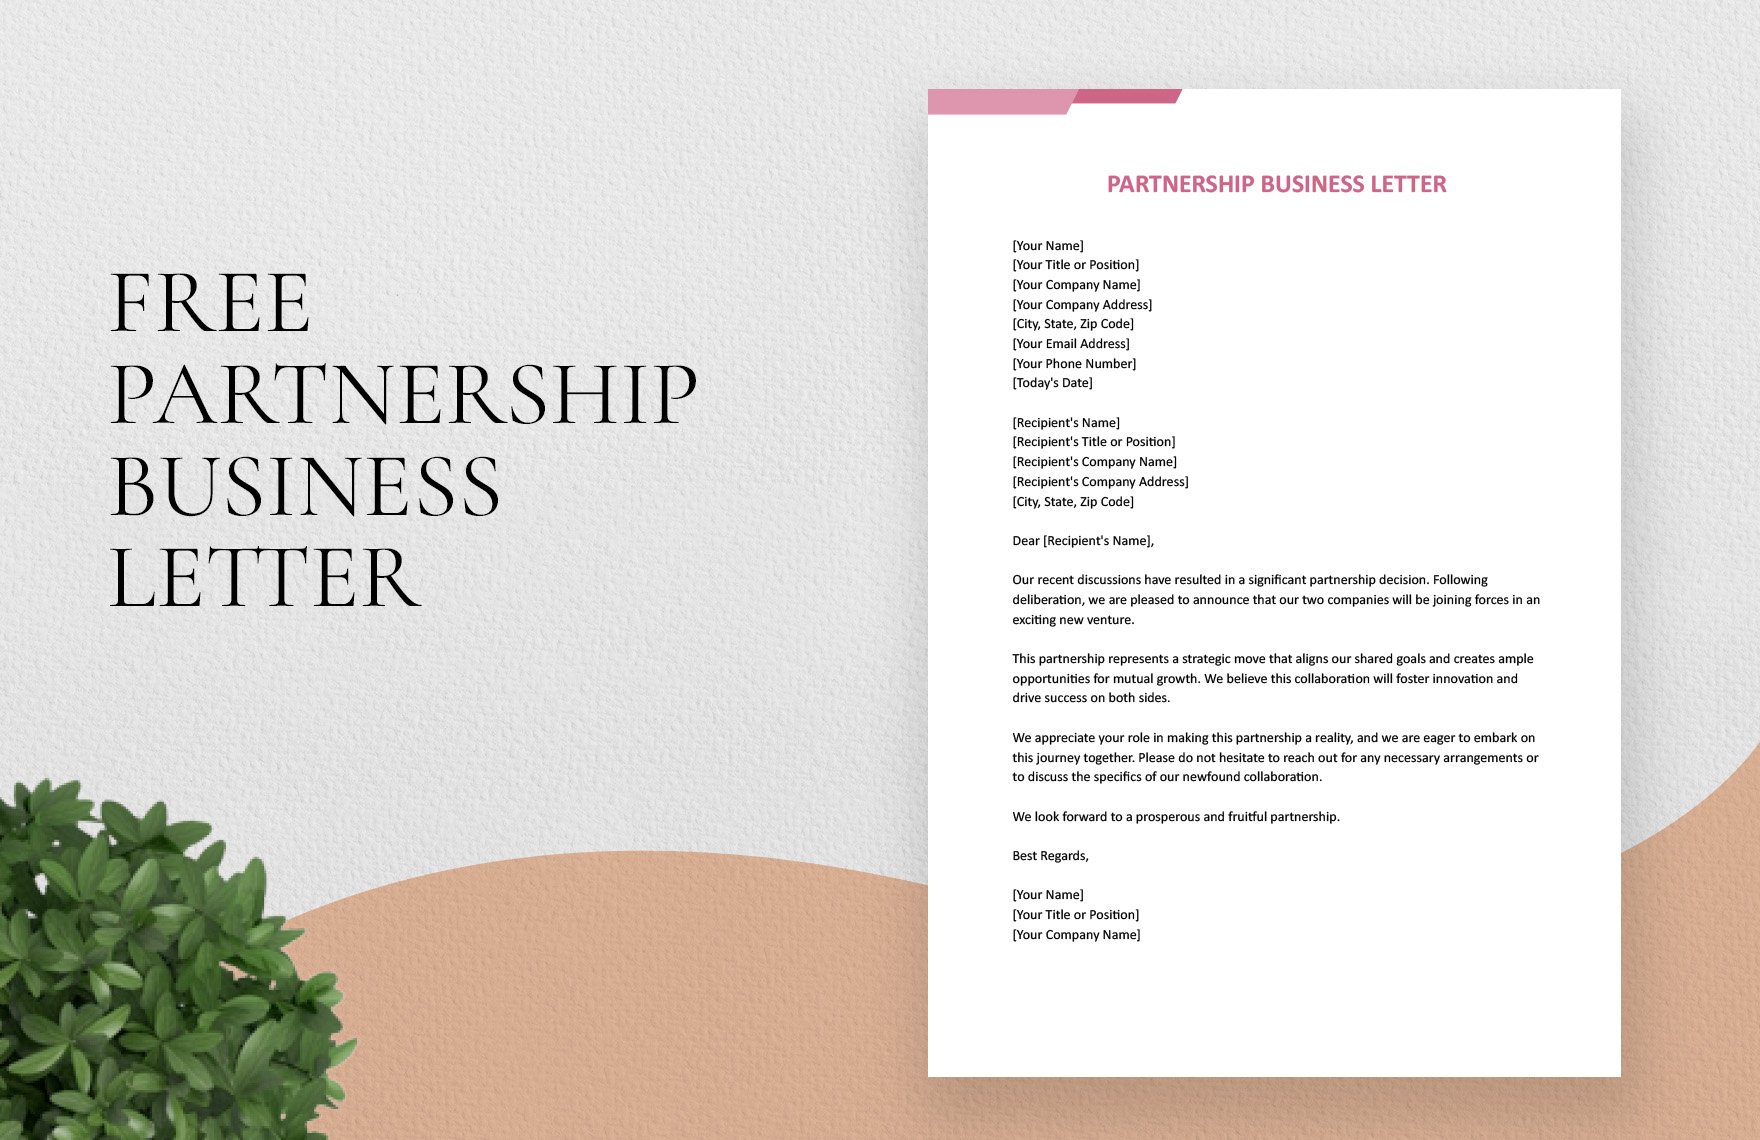 Partnership Business Letter